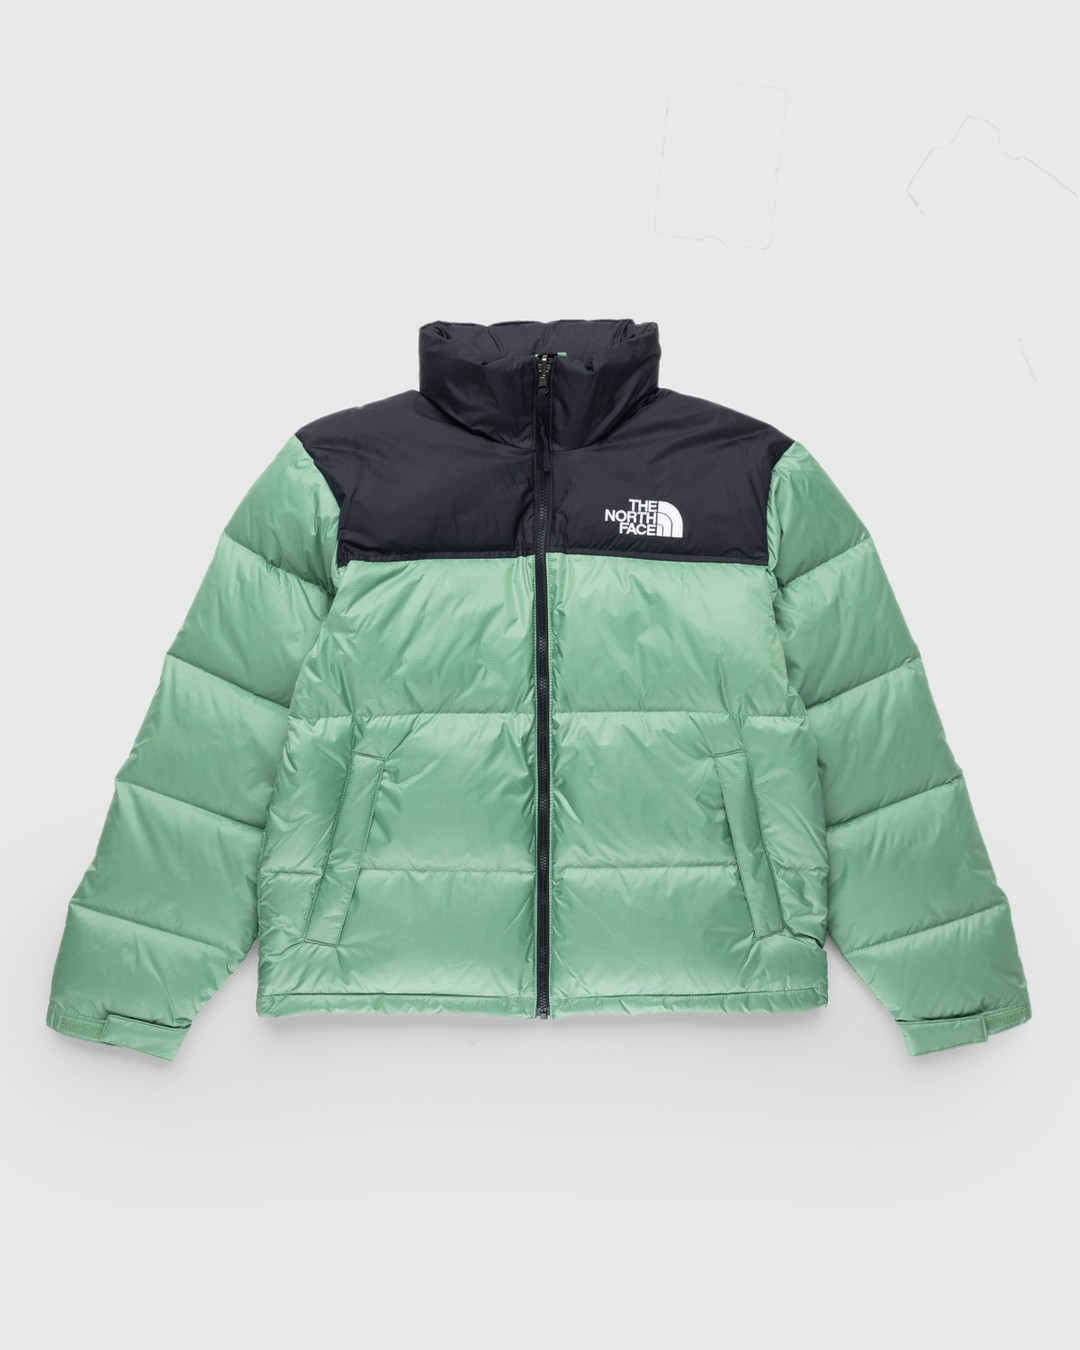 The North Face – 1996 Retro Nuptse Jacket Deep Grass Green - Outerwear - Green - Image 1